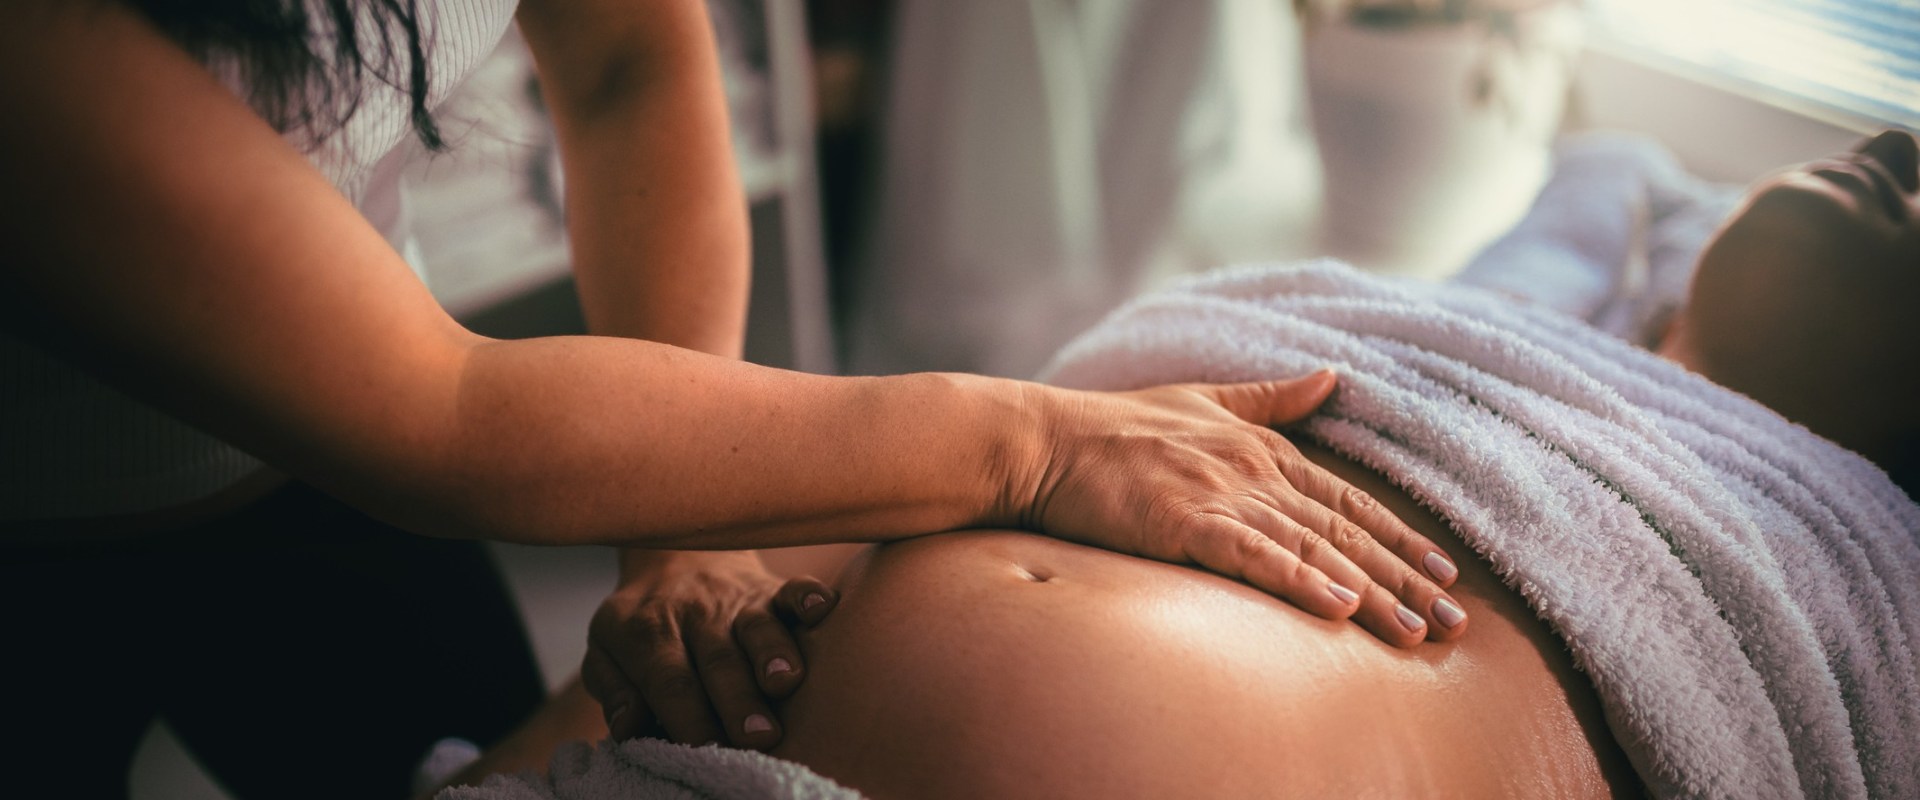 Prenatal Massage Benefits: A Comprehensive Look